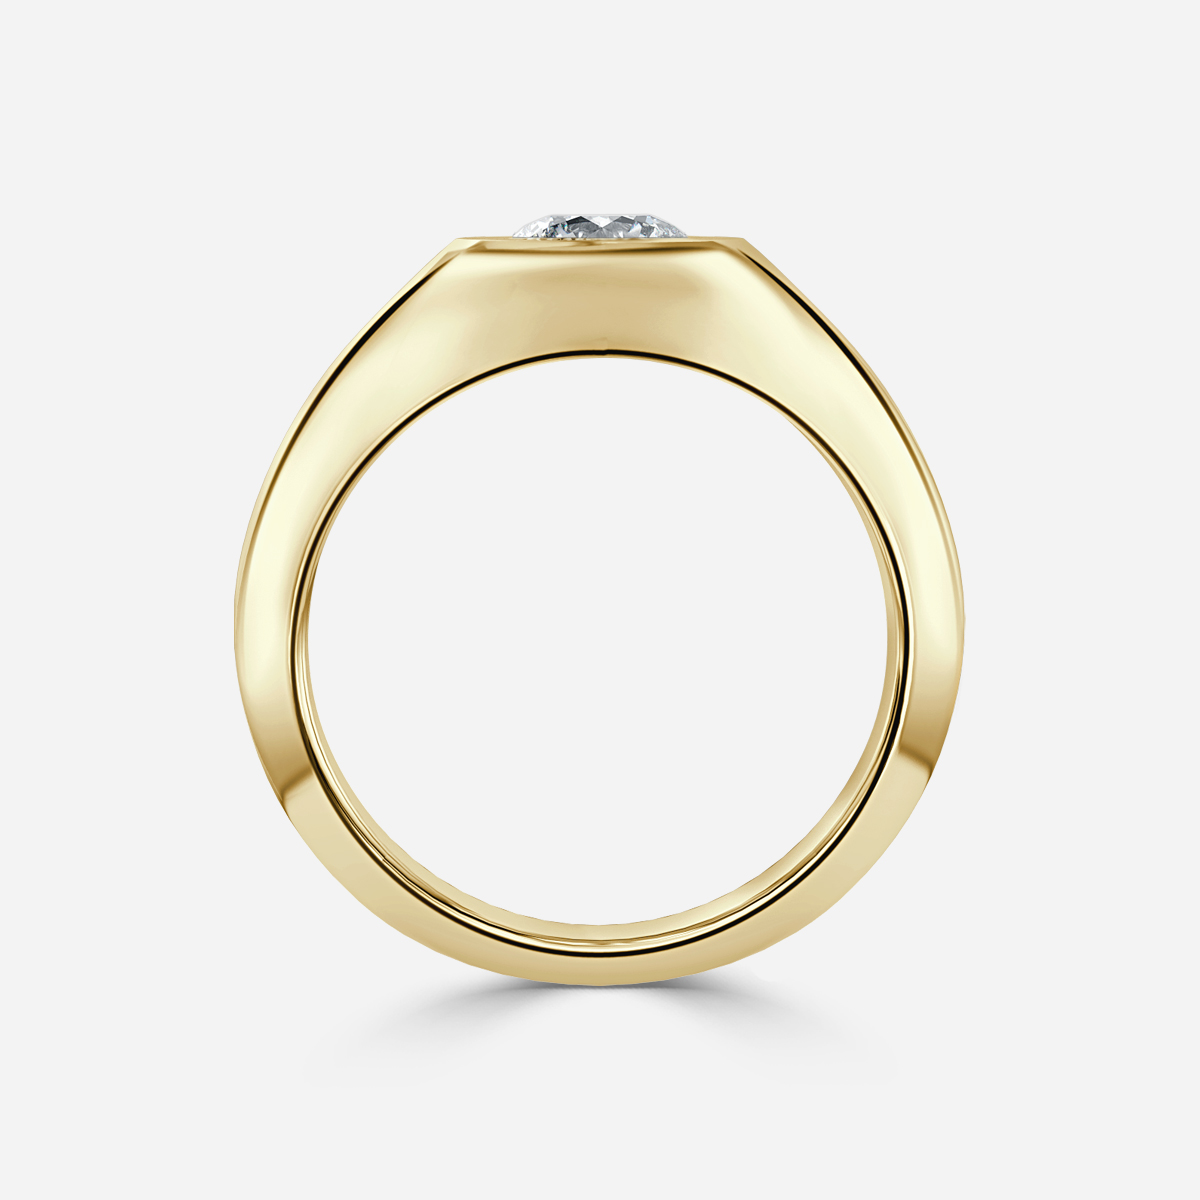 Bezel Set Men's Engagement Ring In Yellow Gold